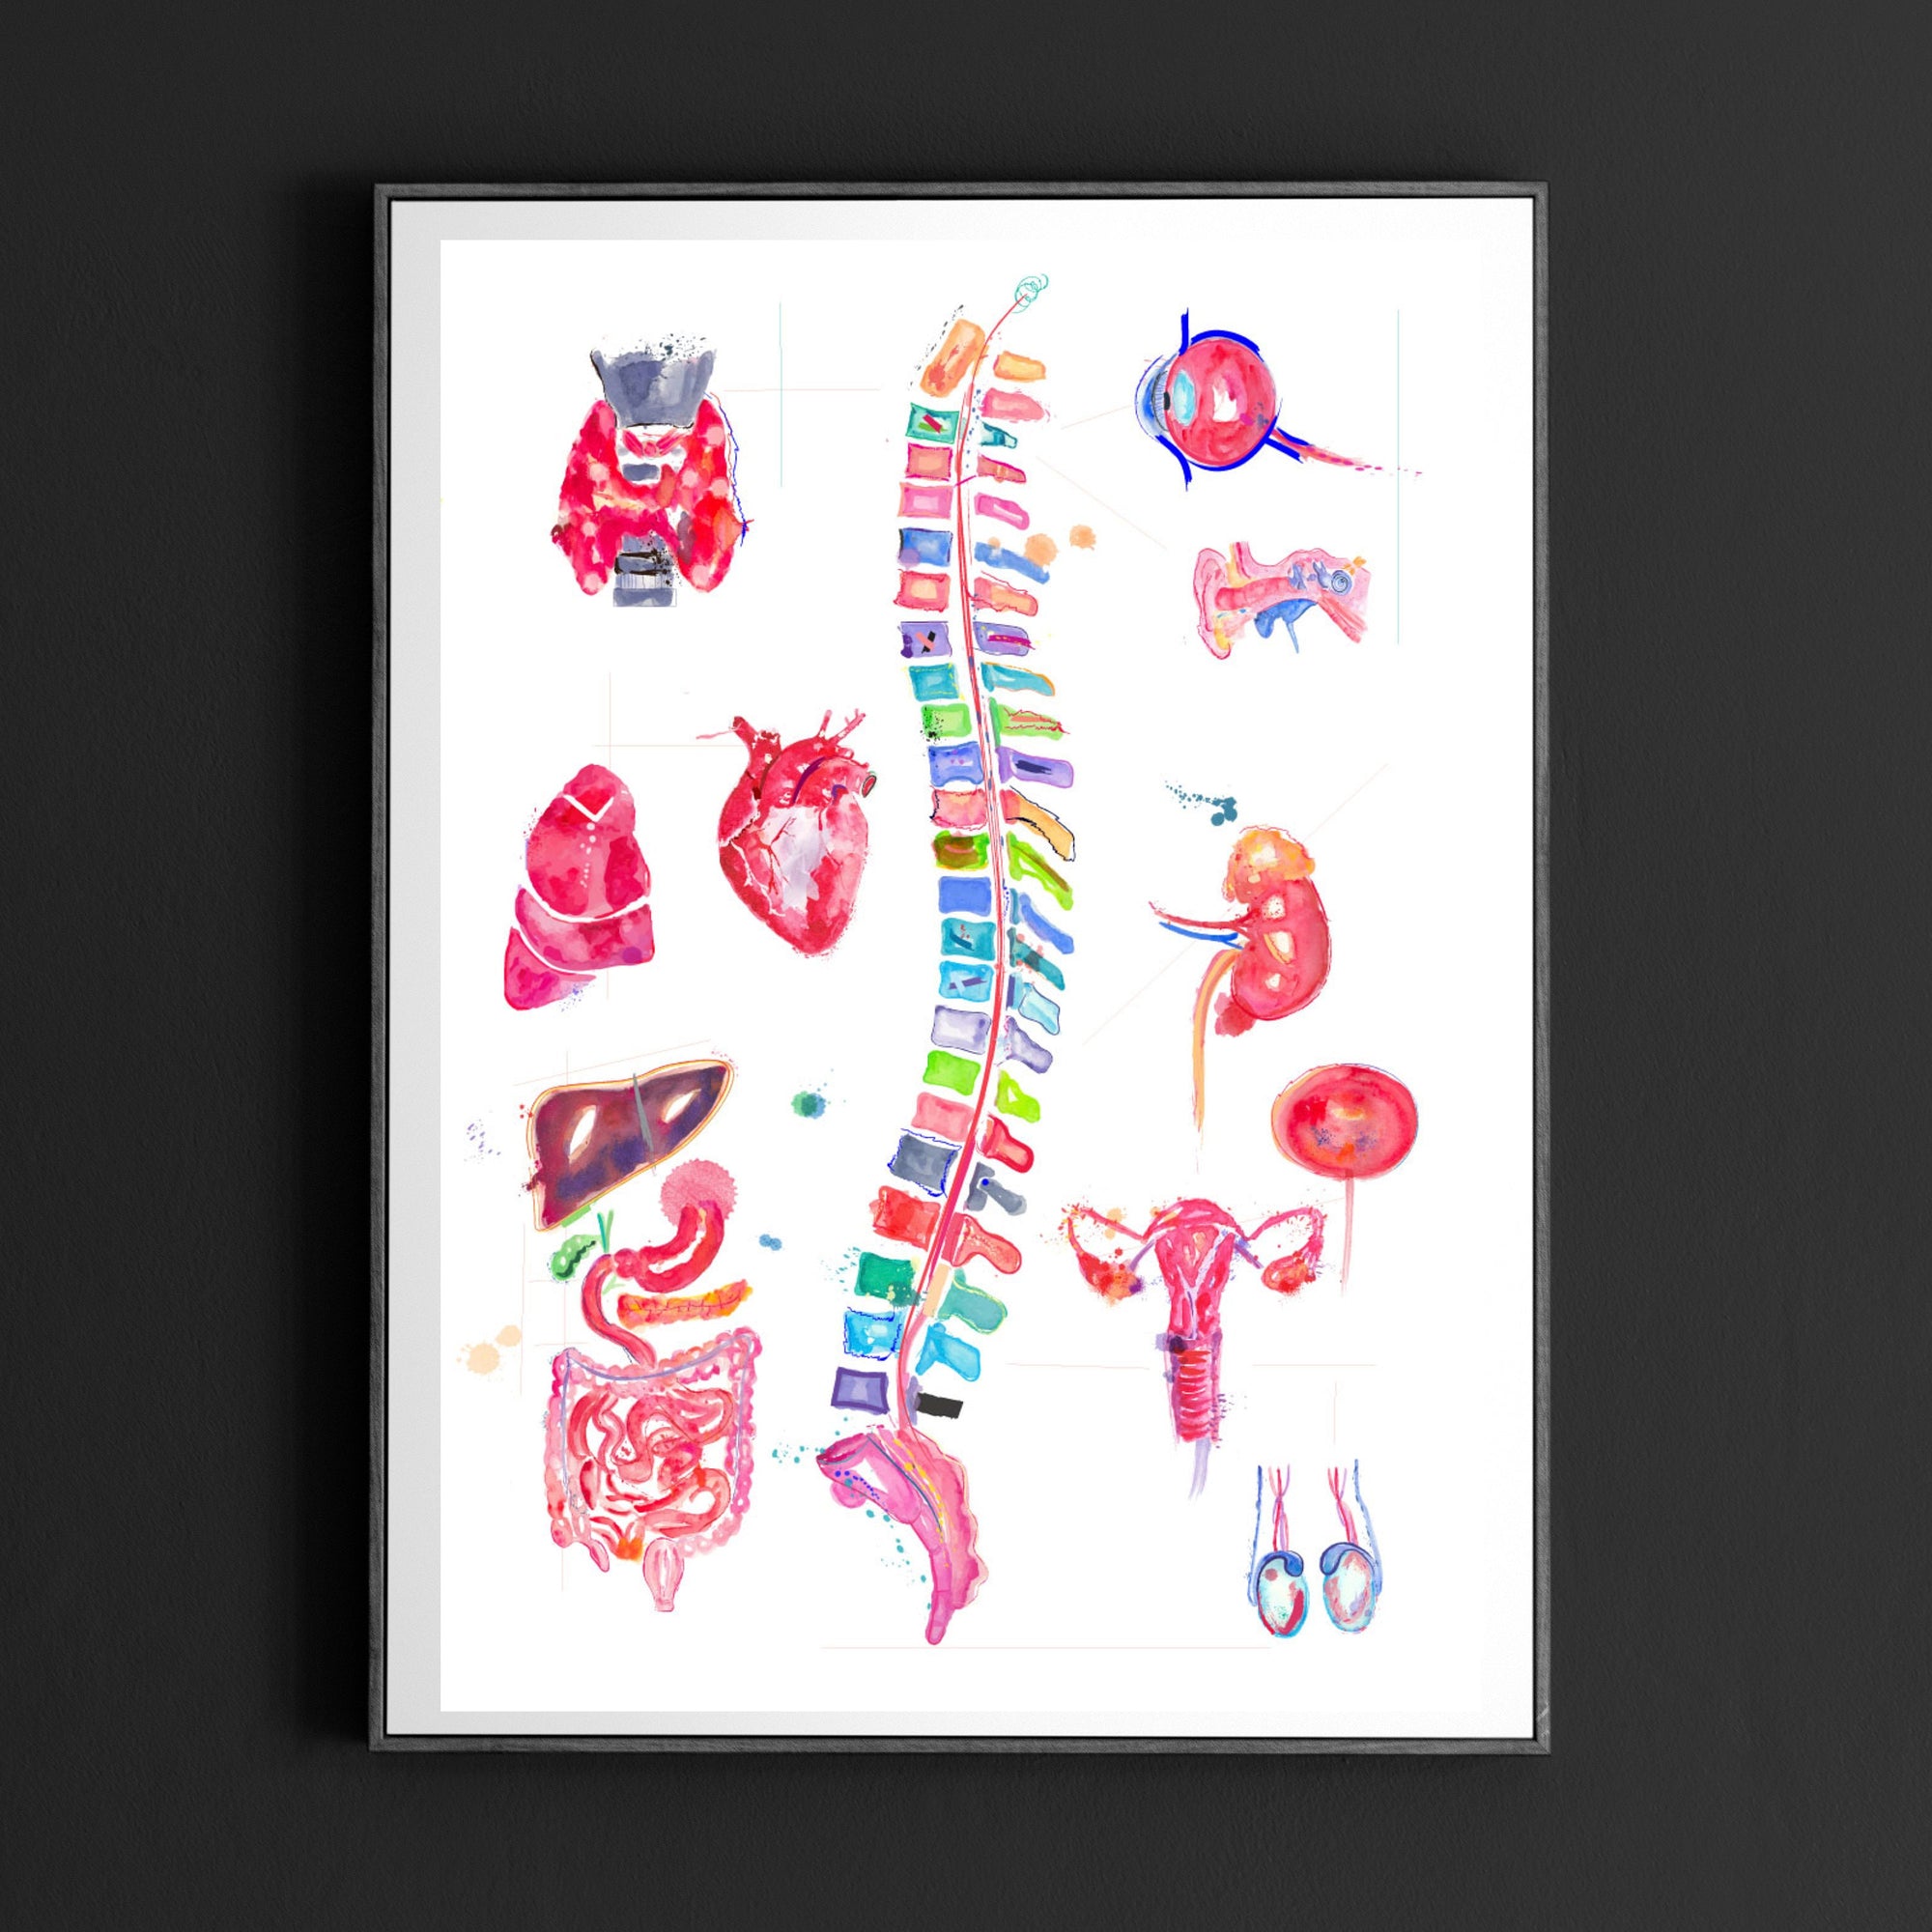 Chiropractic Art, Chiropractor Chart, Spinal Nerve, Abstract Anatomy Art, Osteopathy Art, Chiropractor Gift, Chiropractic Wall Art